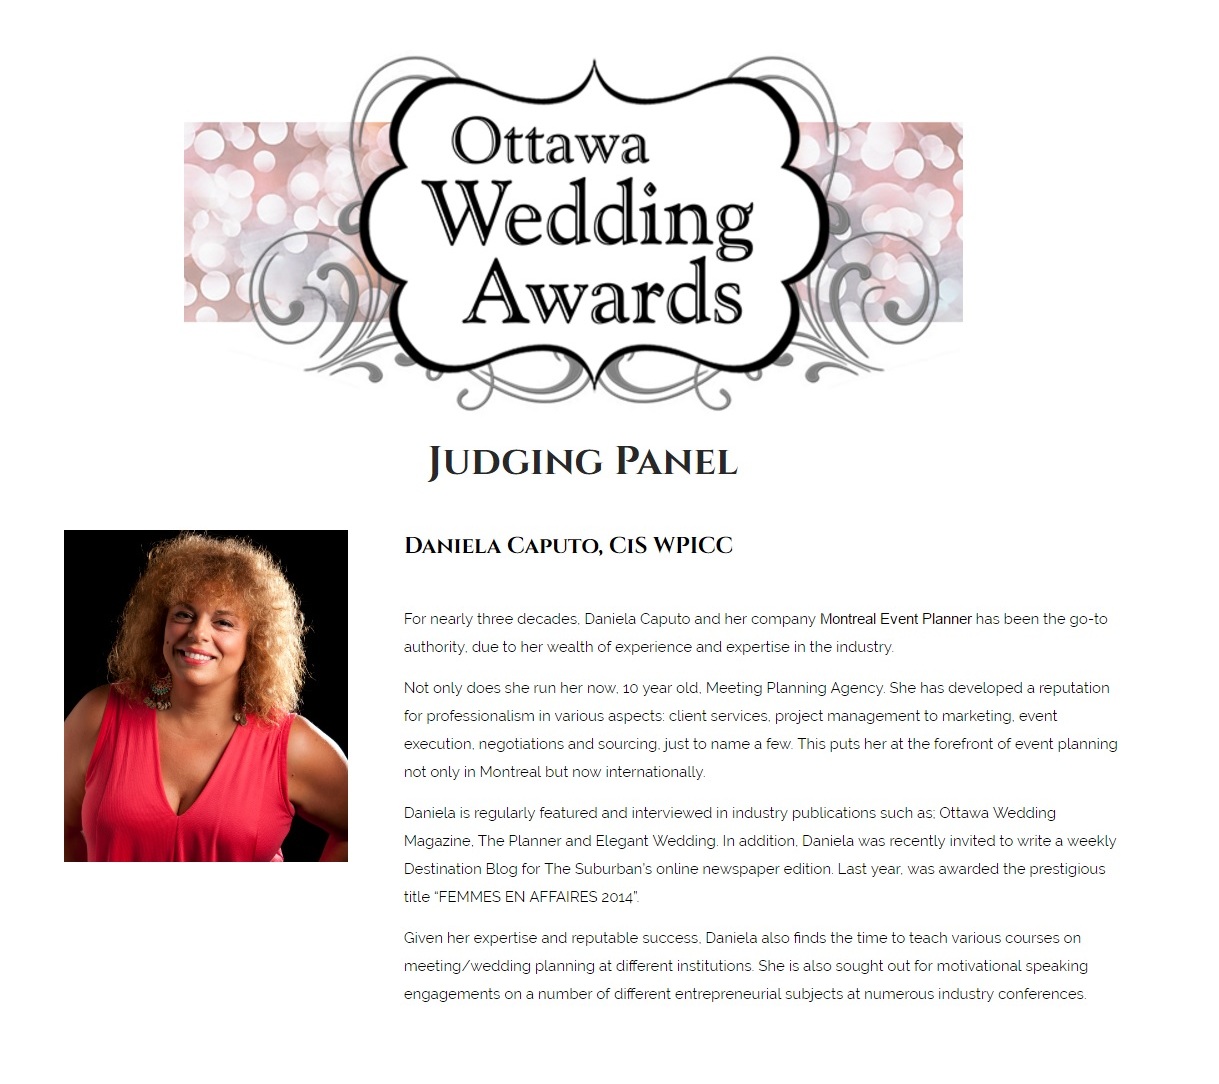 judging-panel-of-the-ottawa-wedding-awards-2017